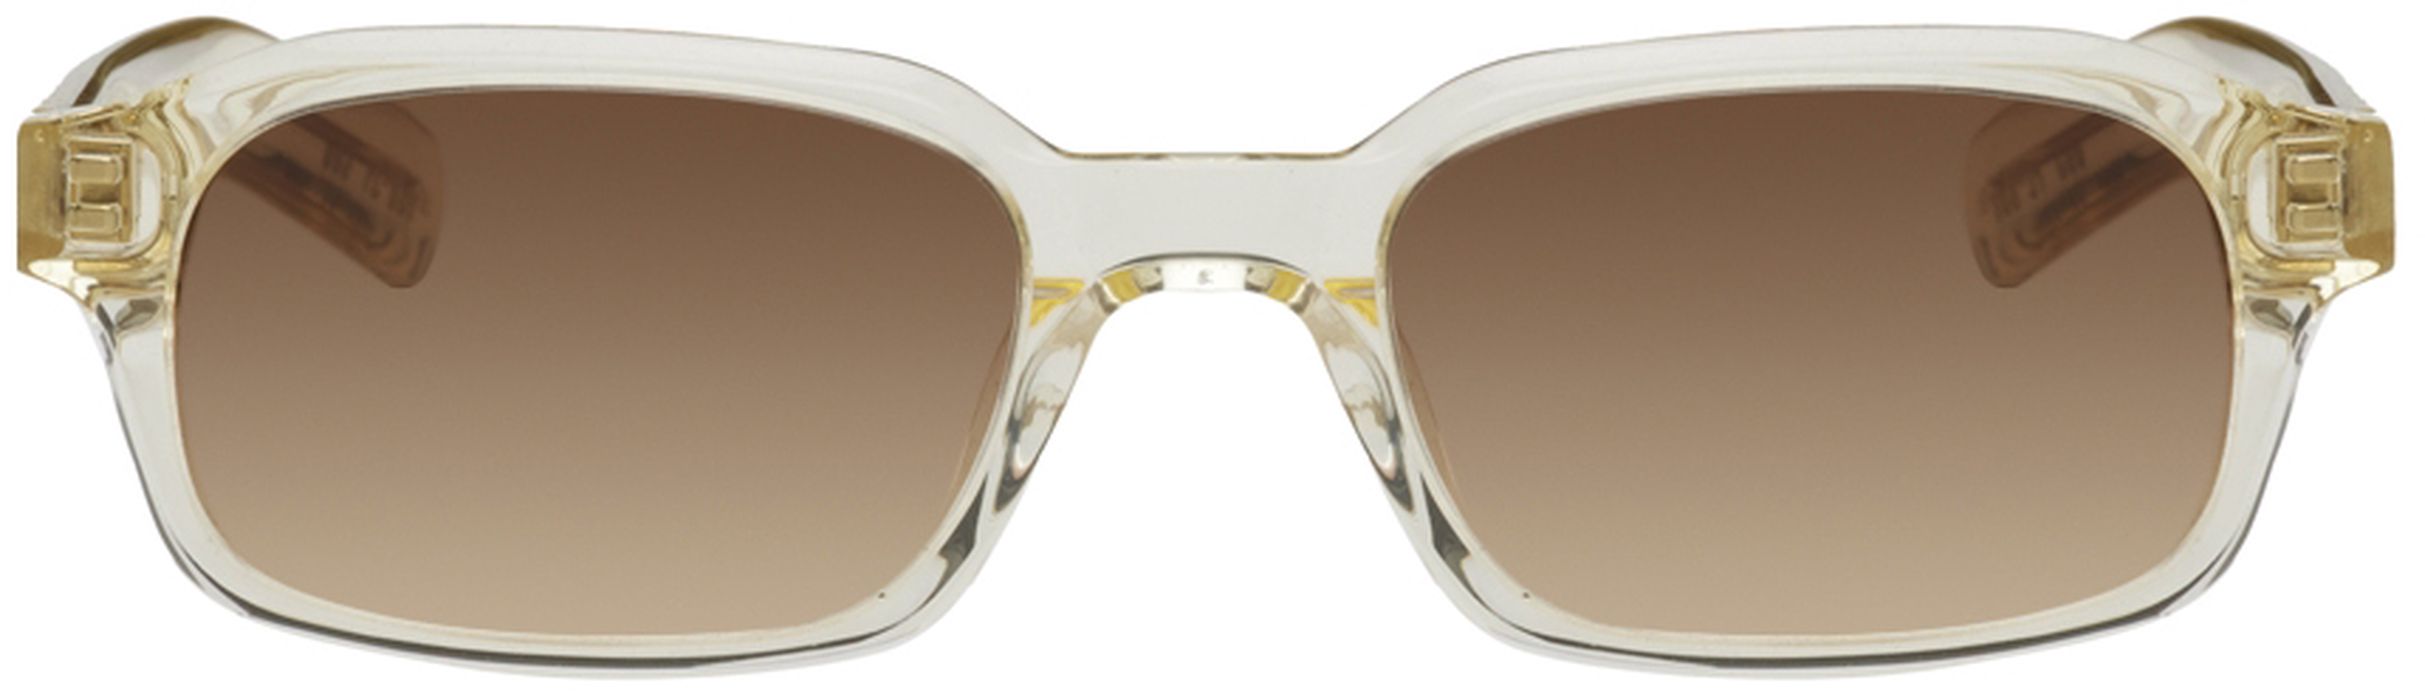 FLATLIST EYEWEAR Transparent Yellow Hanky Sunglasses